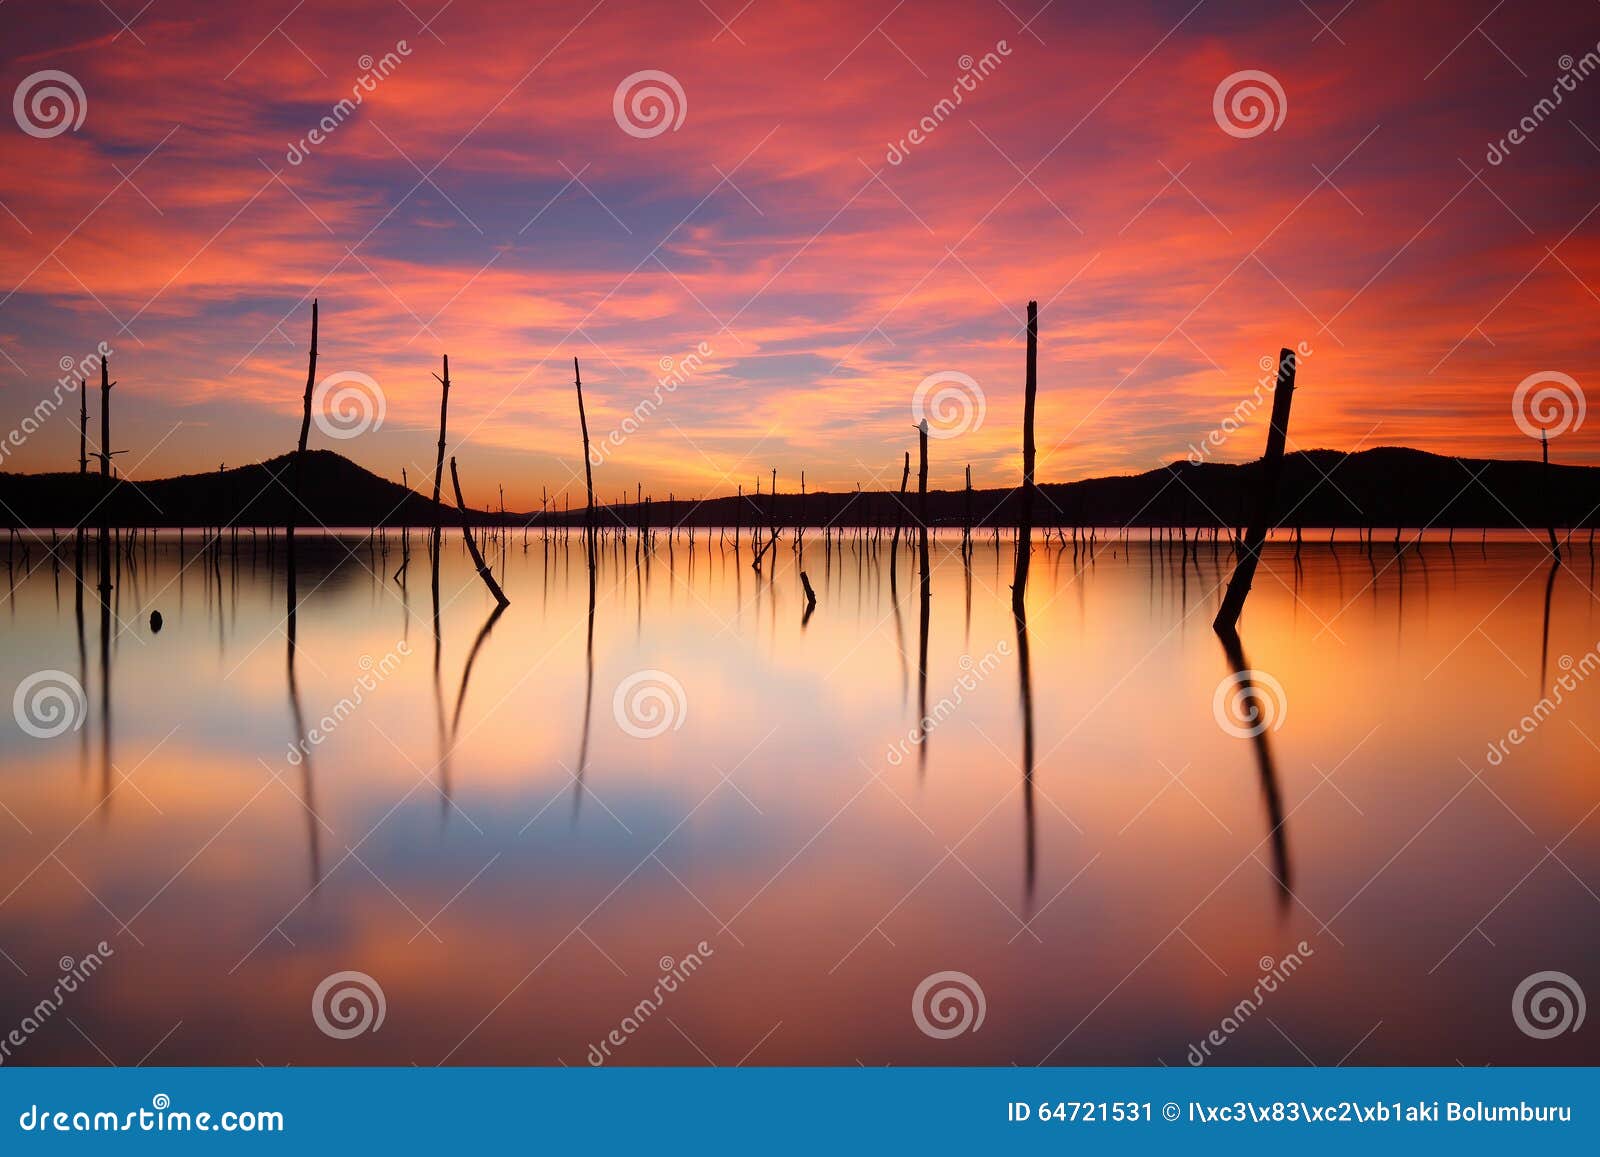 beautiful sunset over a peacefull lake